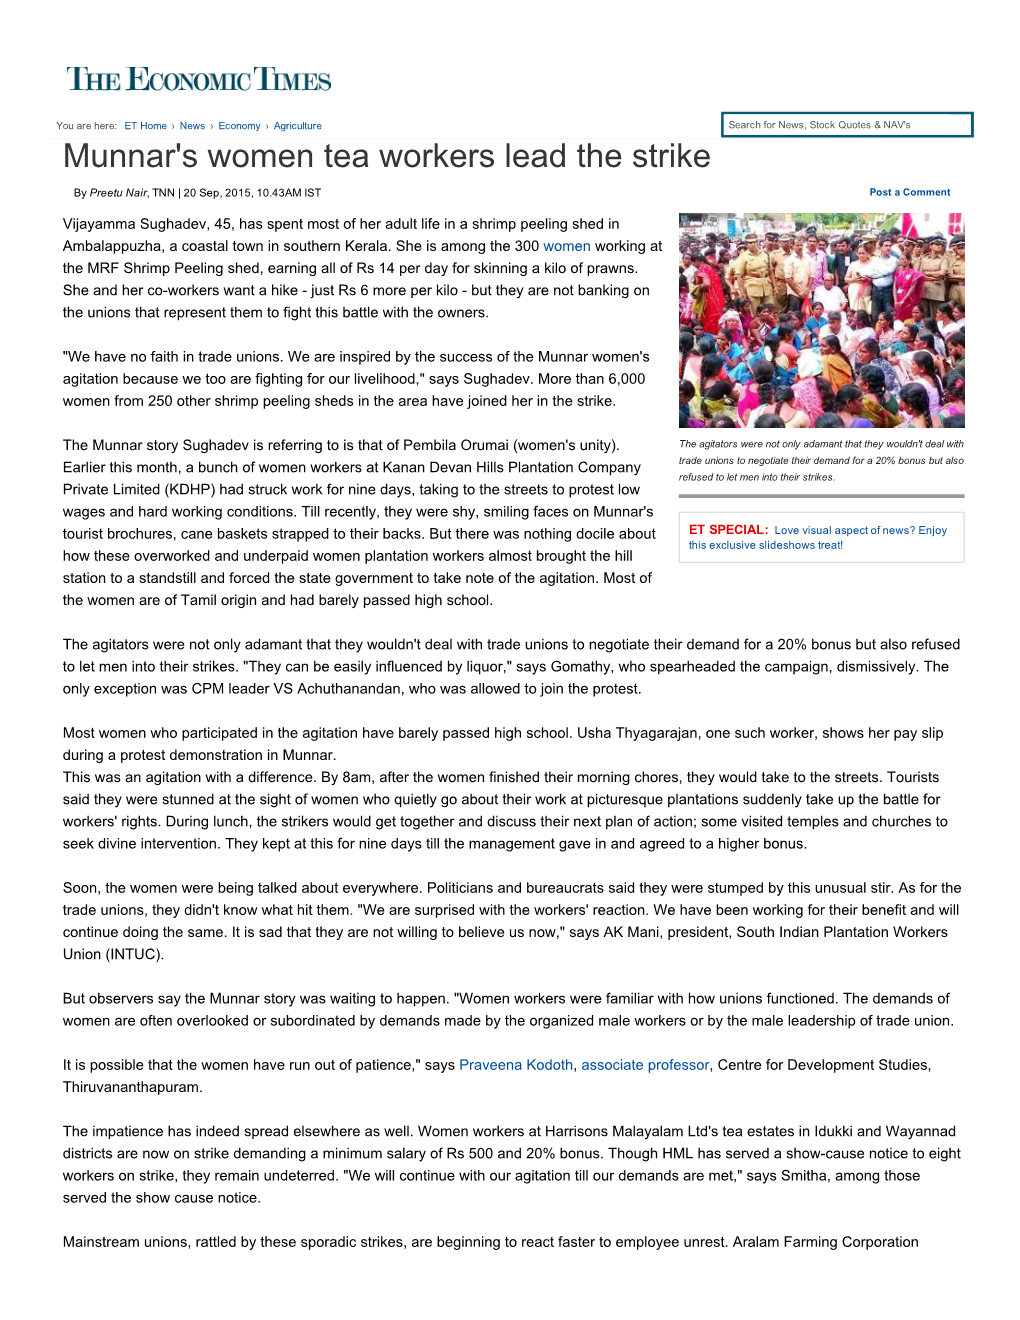 Munnar's Women Tea Workers Lead the Strike